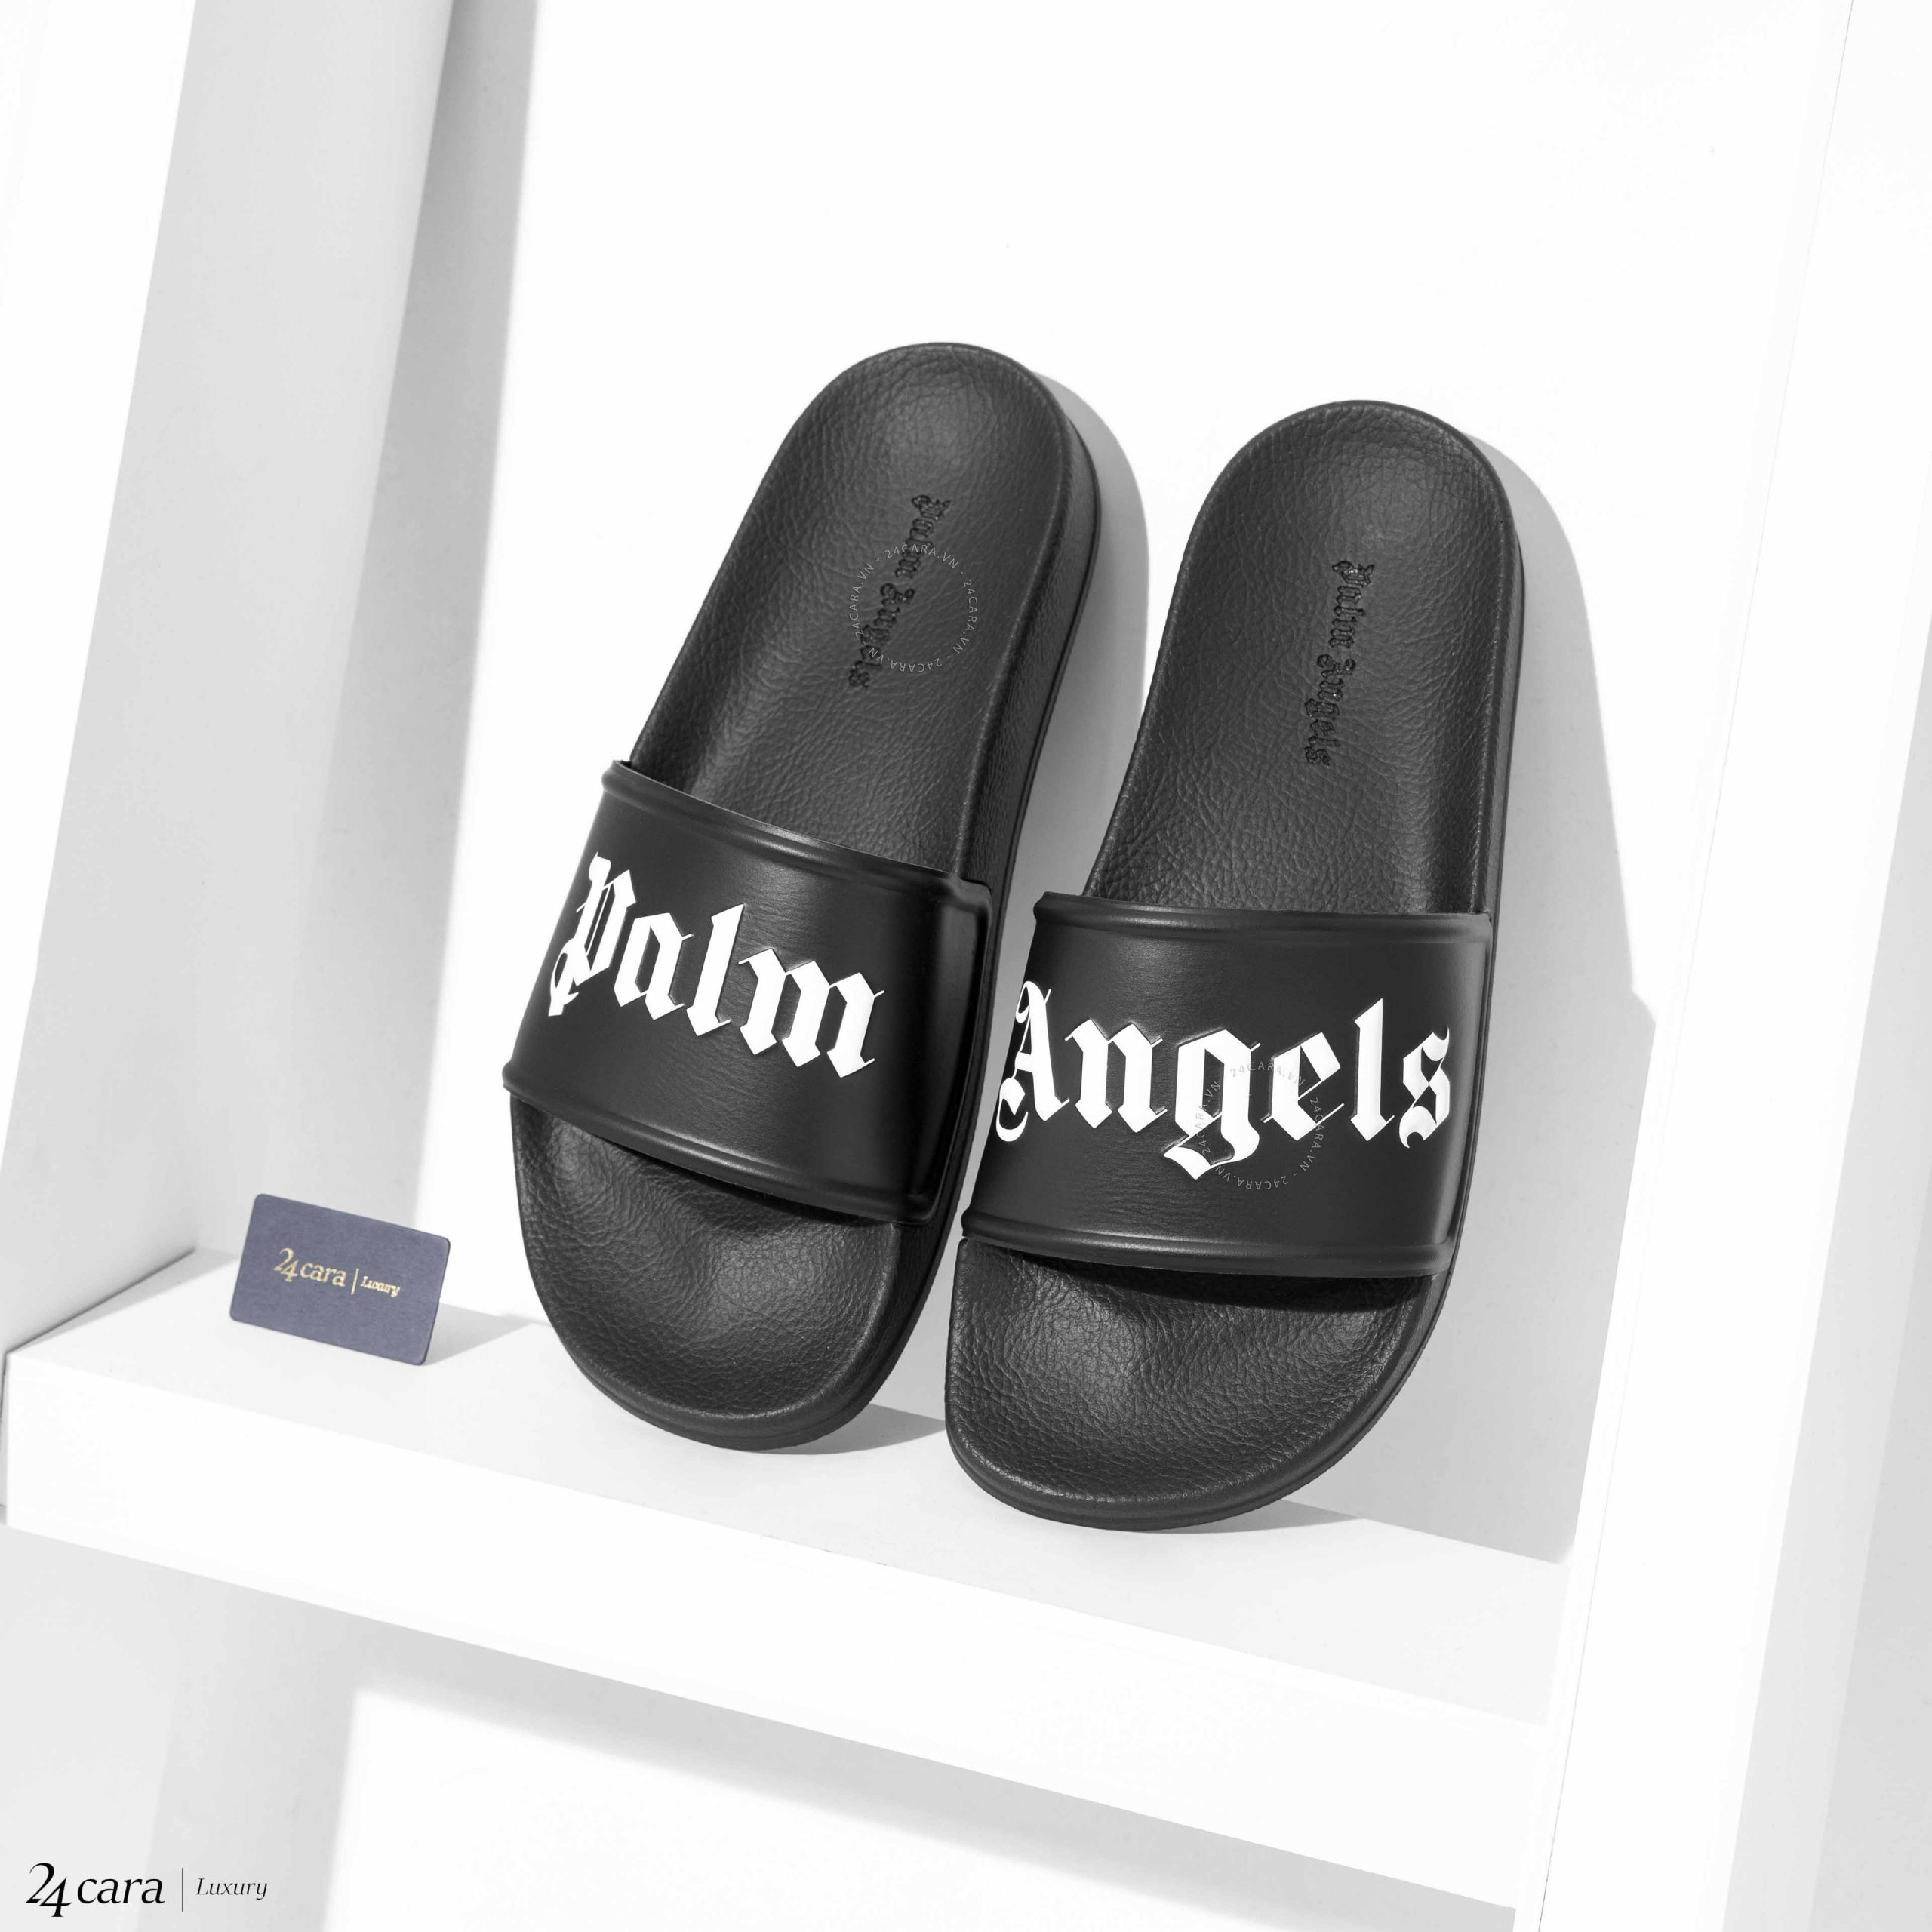 Palm Angels Black Sliders